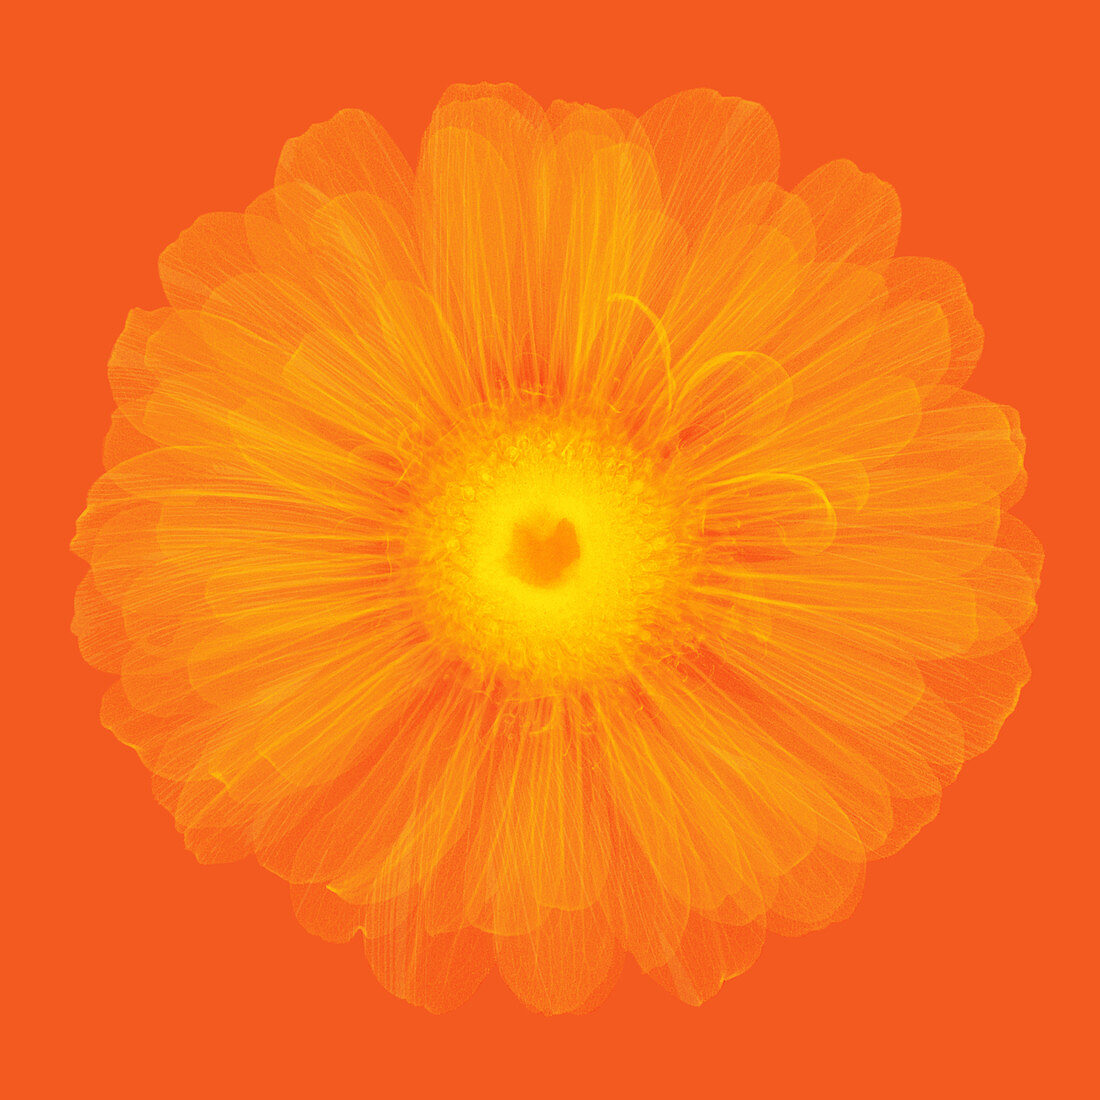 Zinnia Flower, X-ray